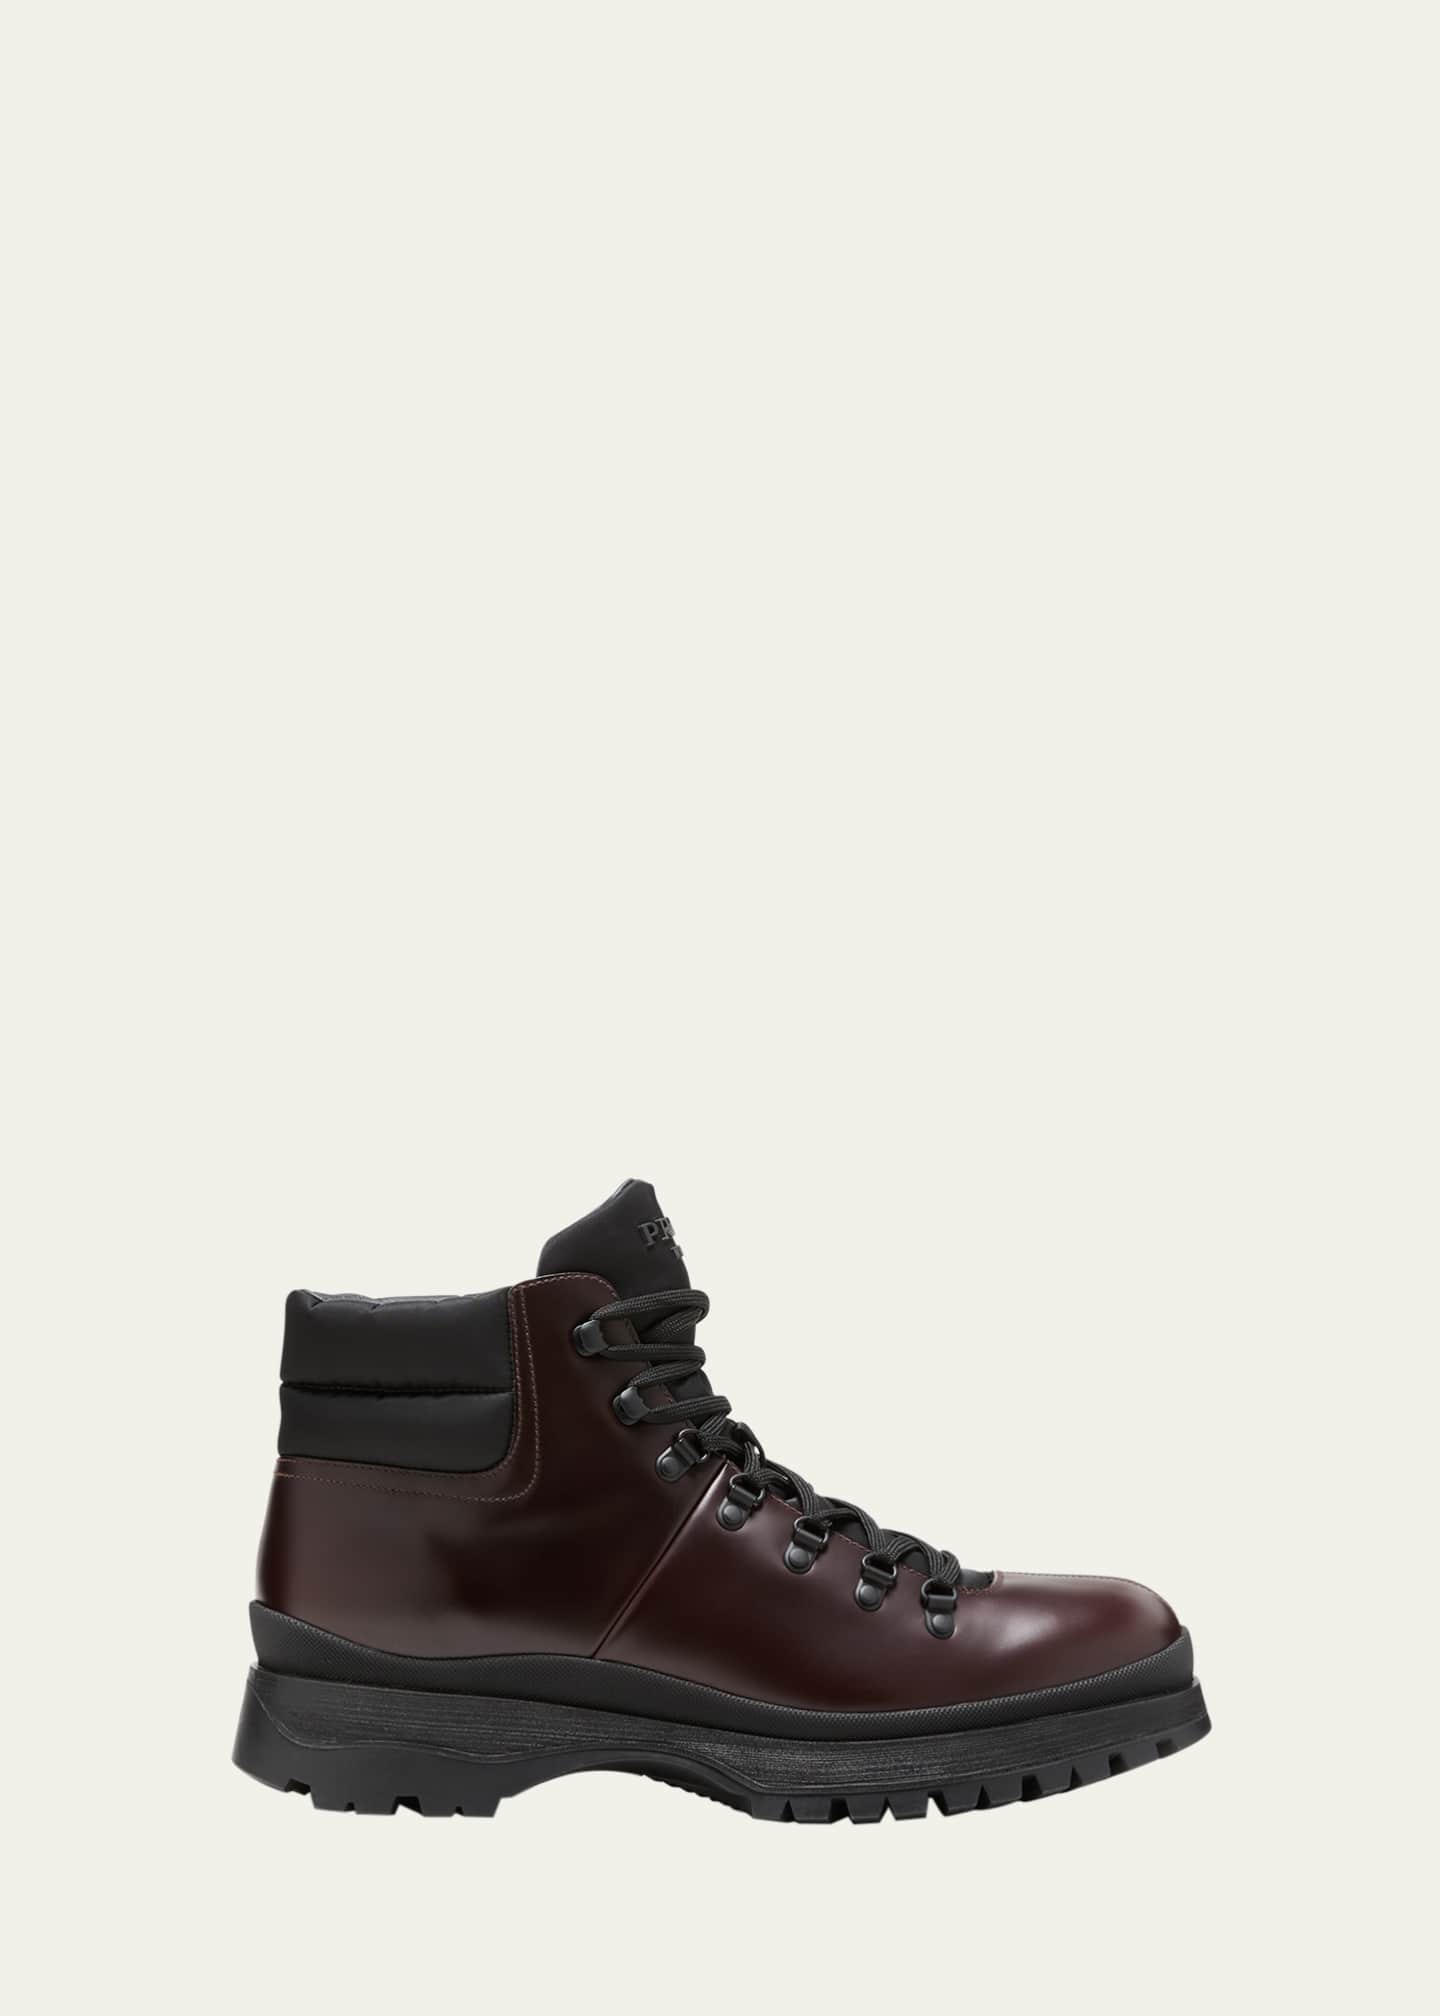 Prada Men's Brucciato Leather Lace-Up Hiking Boots - Bergdorf Goodman